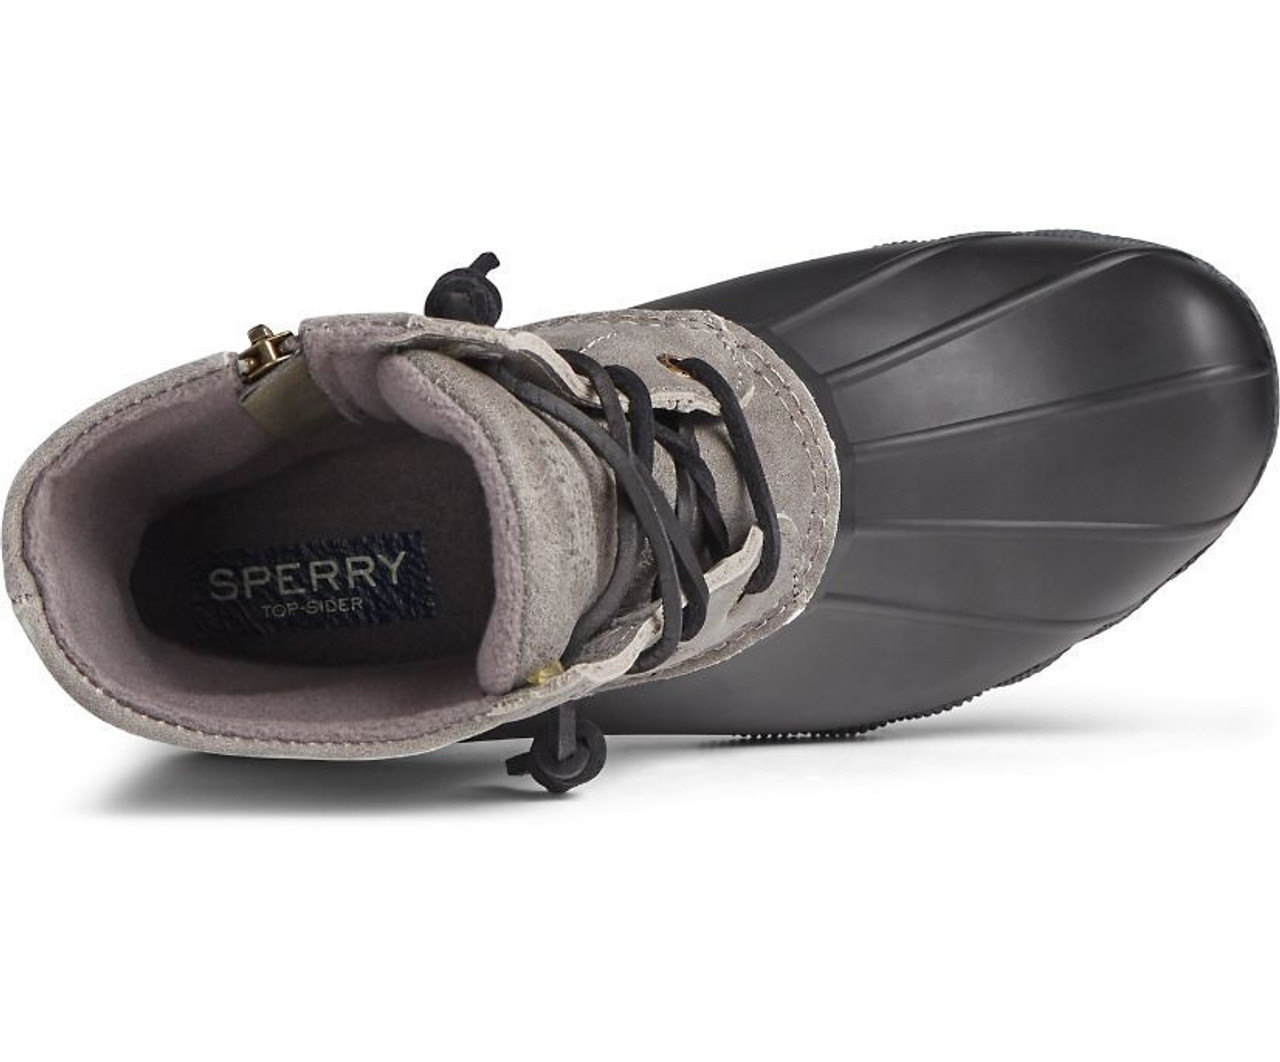 Sperry Women's Saltwater Leather Duck Boot - Navy/Grey